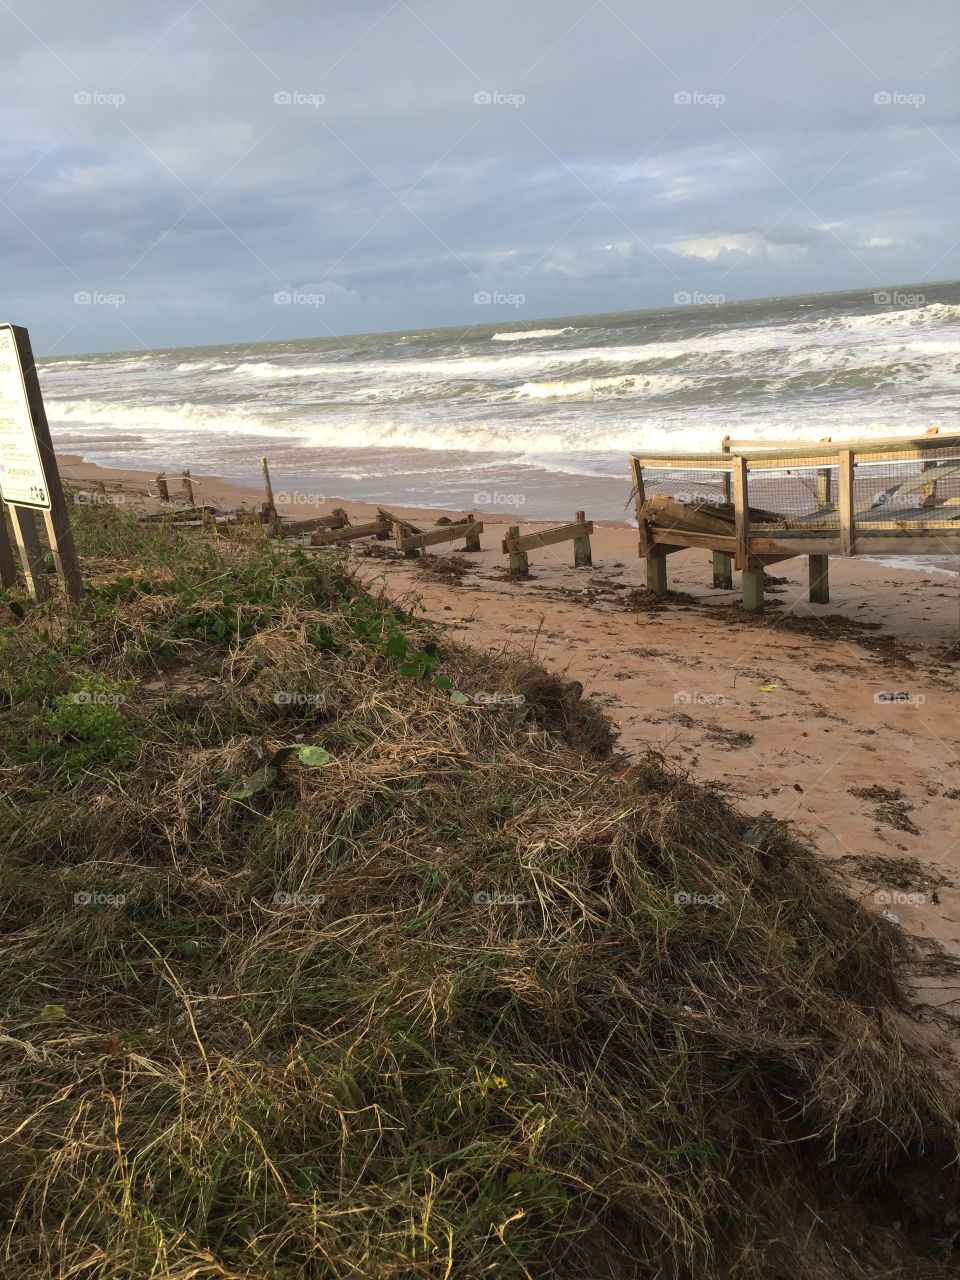 Damaged boardwalk, Ormond Beach Florida after Hurricane Matthew.